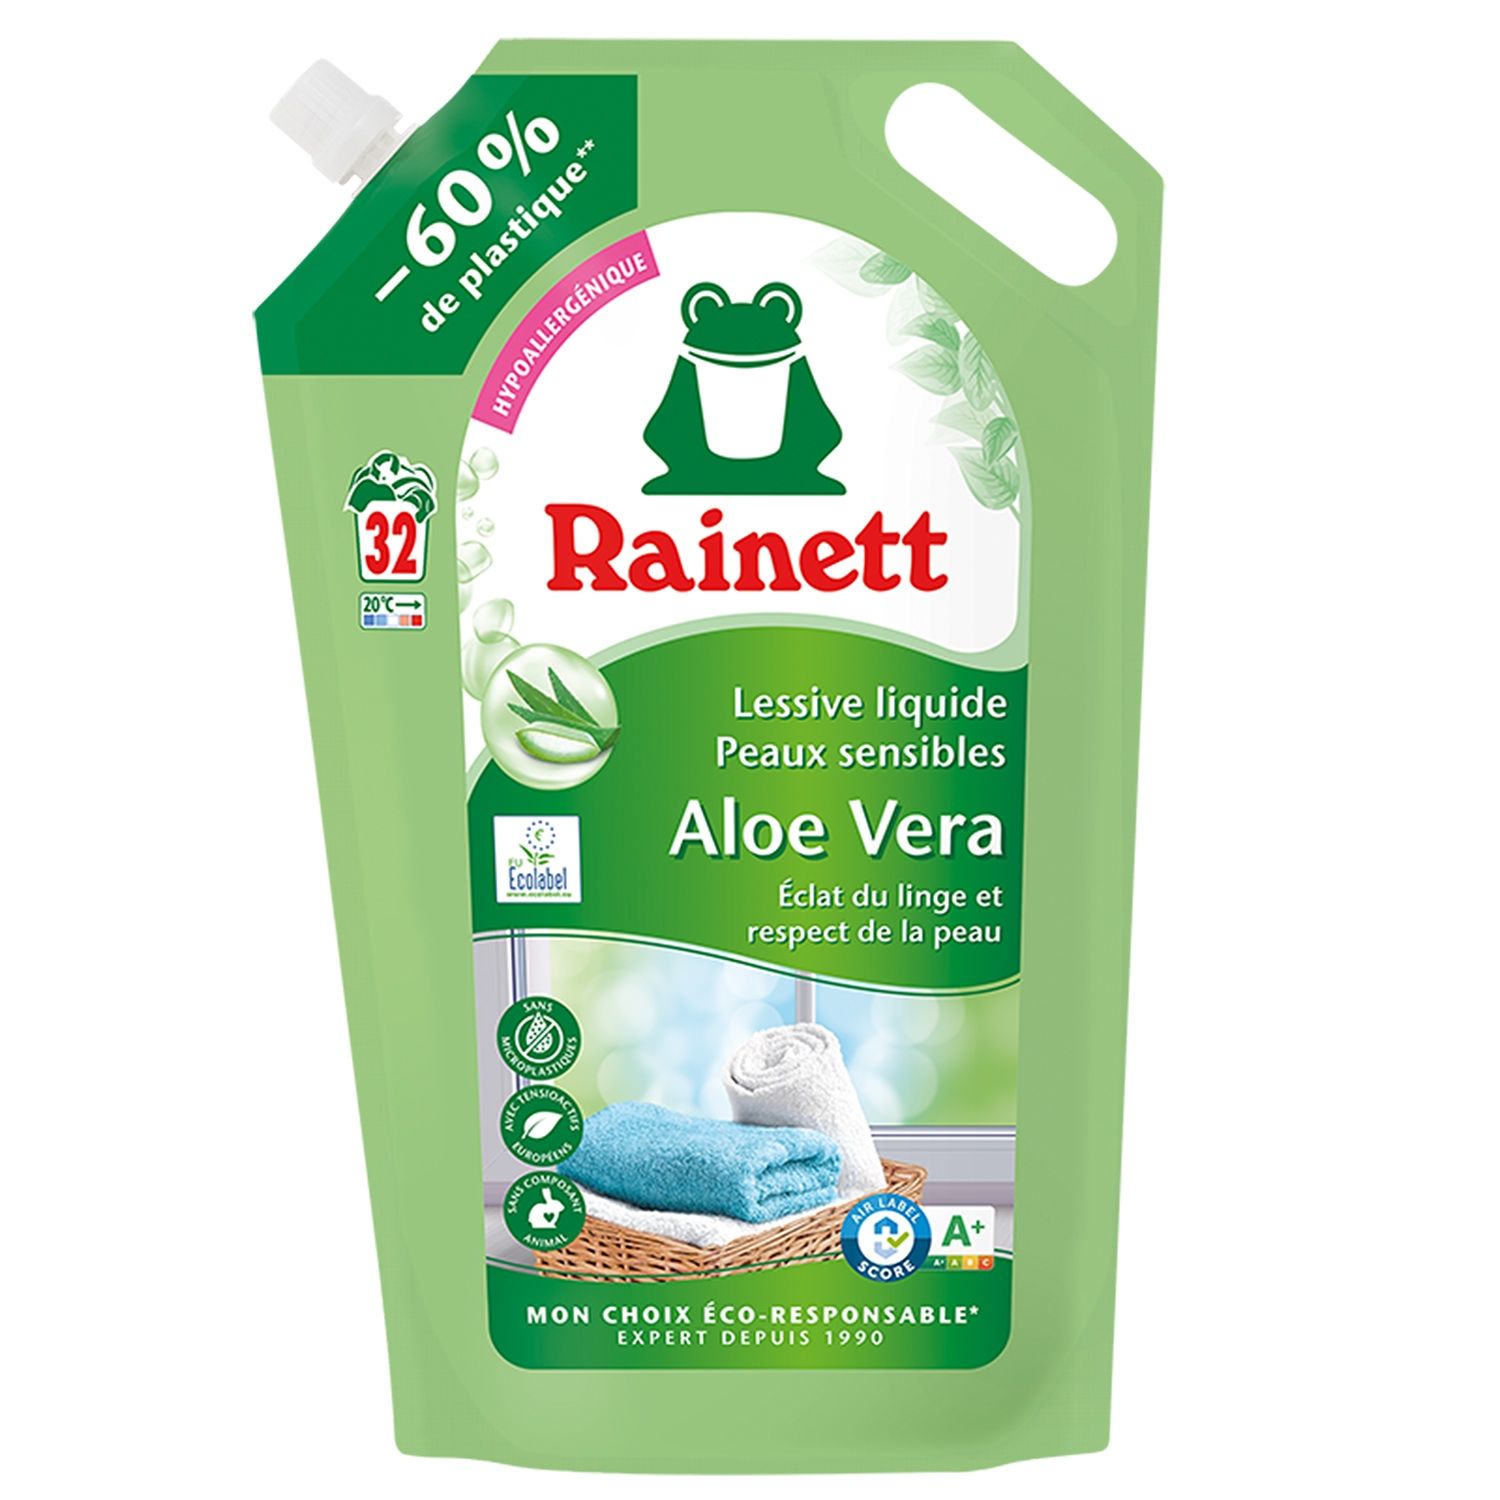 Promo Rainett lessive liquide peaux sensibles aloe vera chez